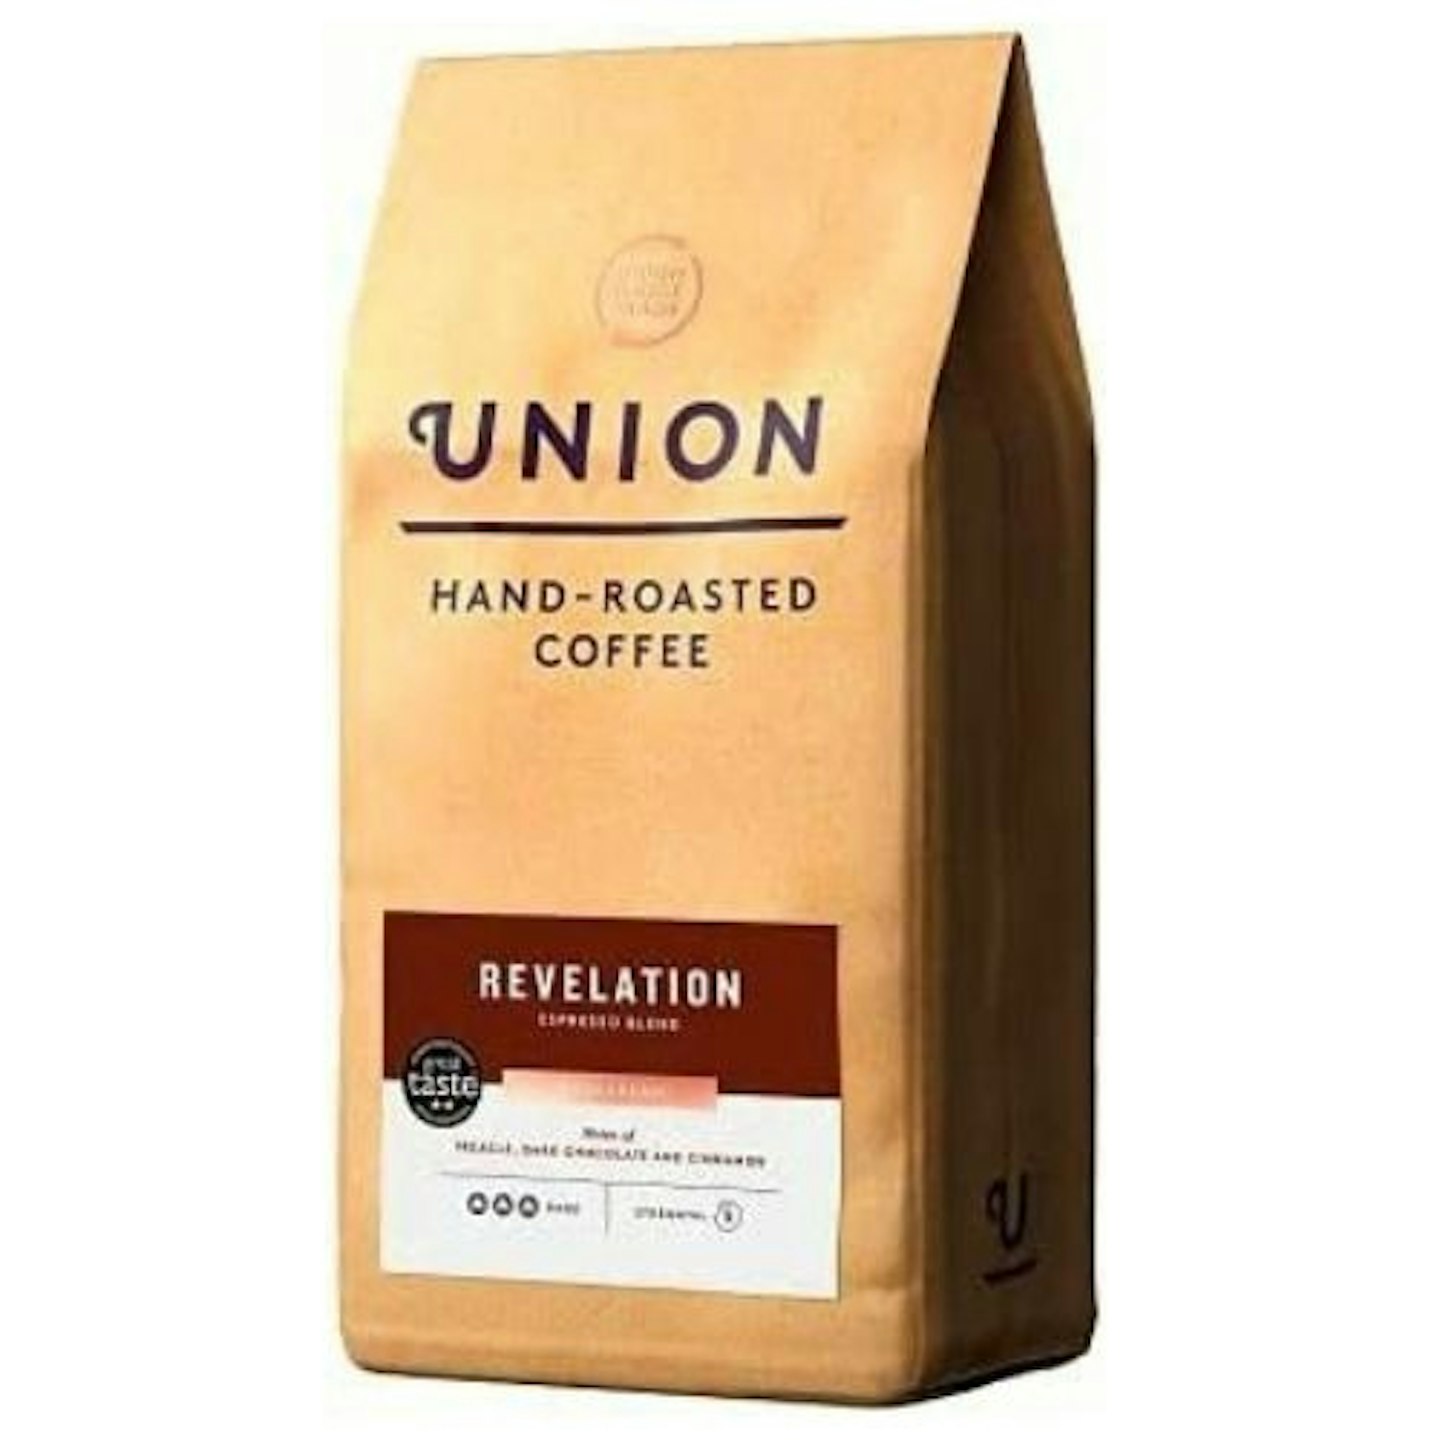 Union Hand-Roasted Coffee - Revelation Espresso Coffee Beans